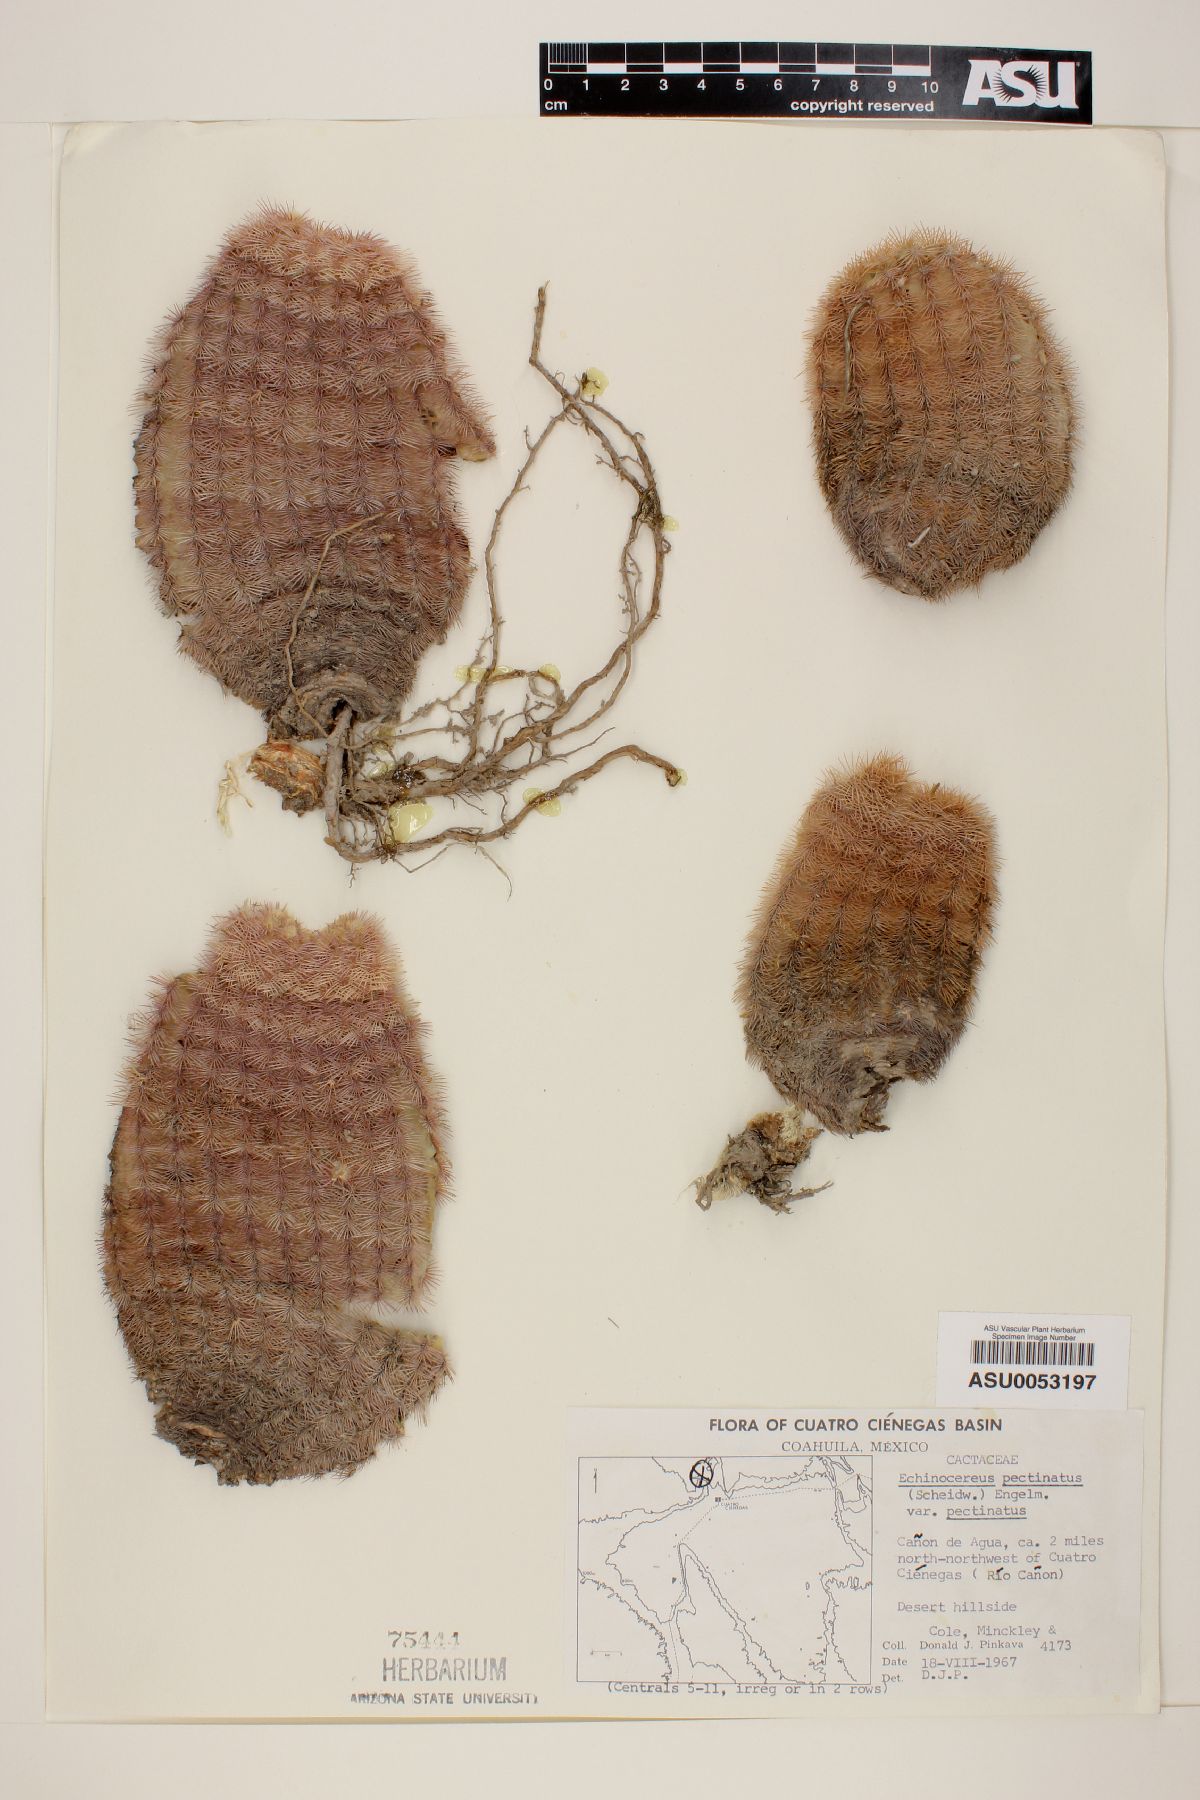 Echinocereus pectinatus image